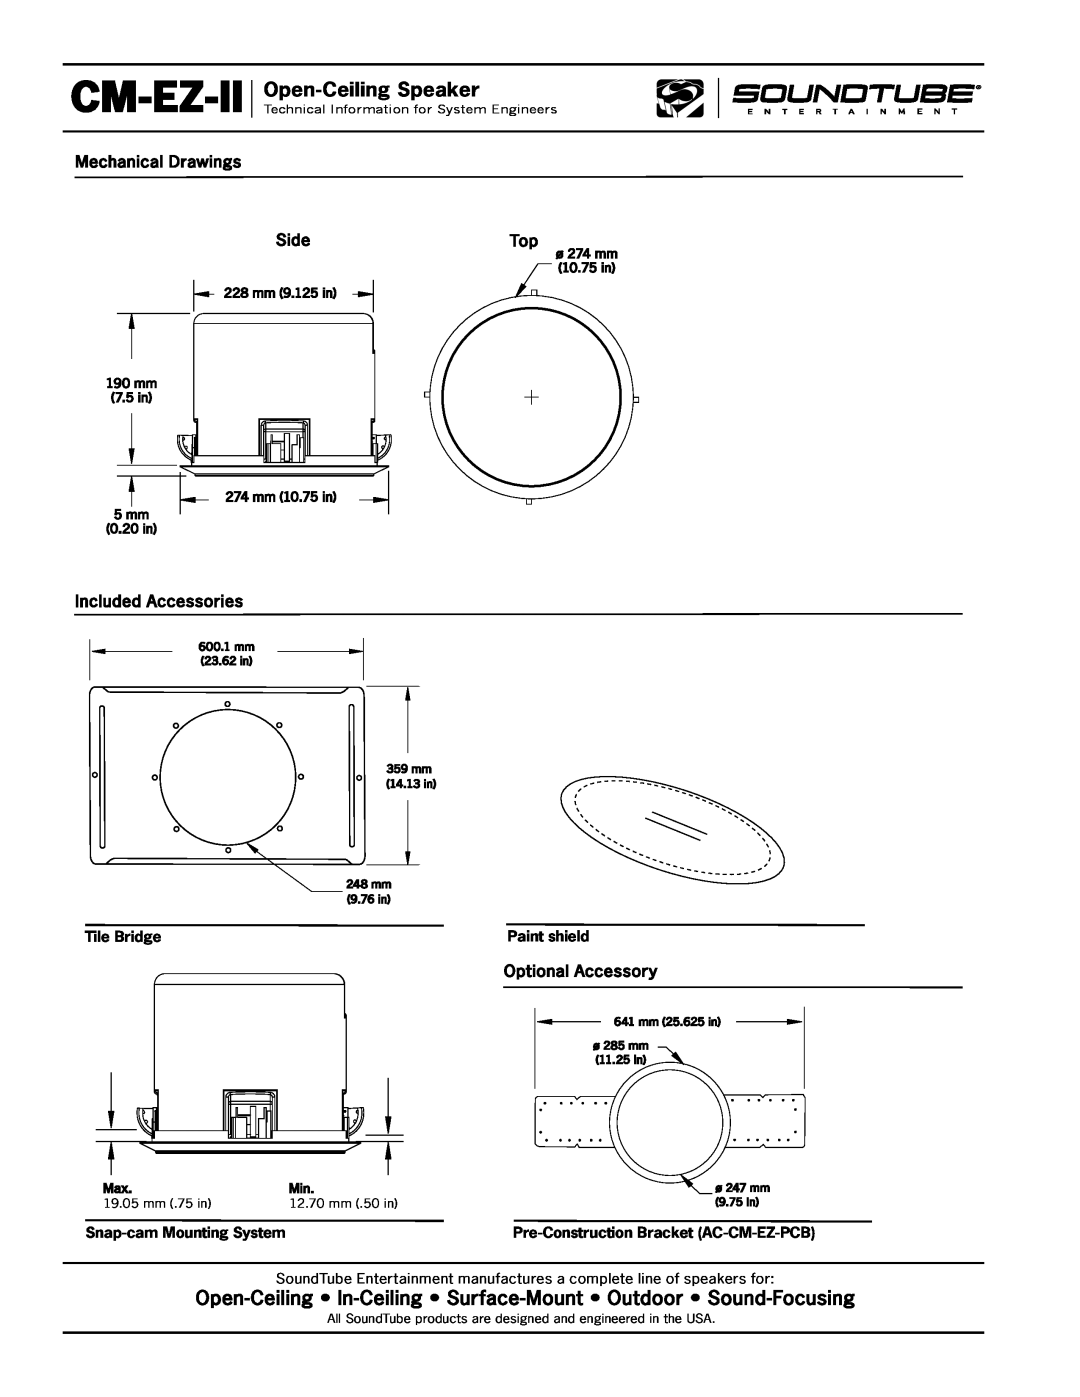 Phase Technology CM-EZ-II Cm-Ez-Ii, Open-CeilingSpeaker, Tile Bridge, Paint shield, Snap-camMounting System, ø 247 mm 